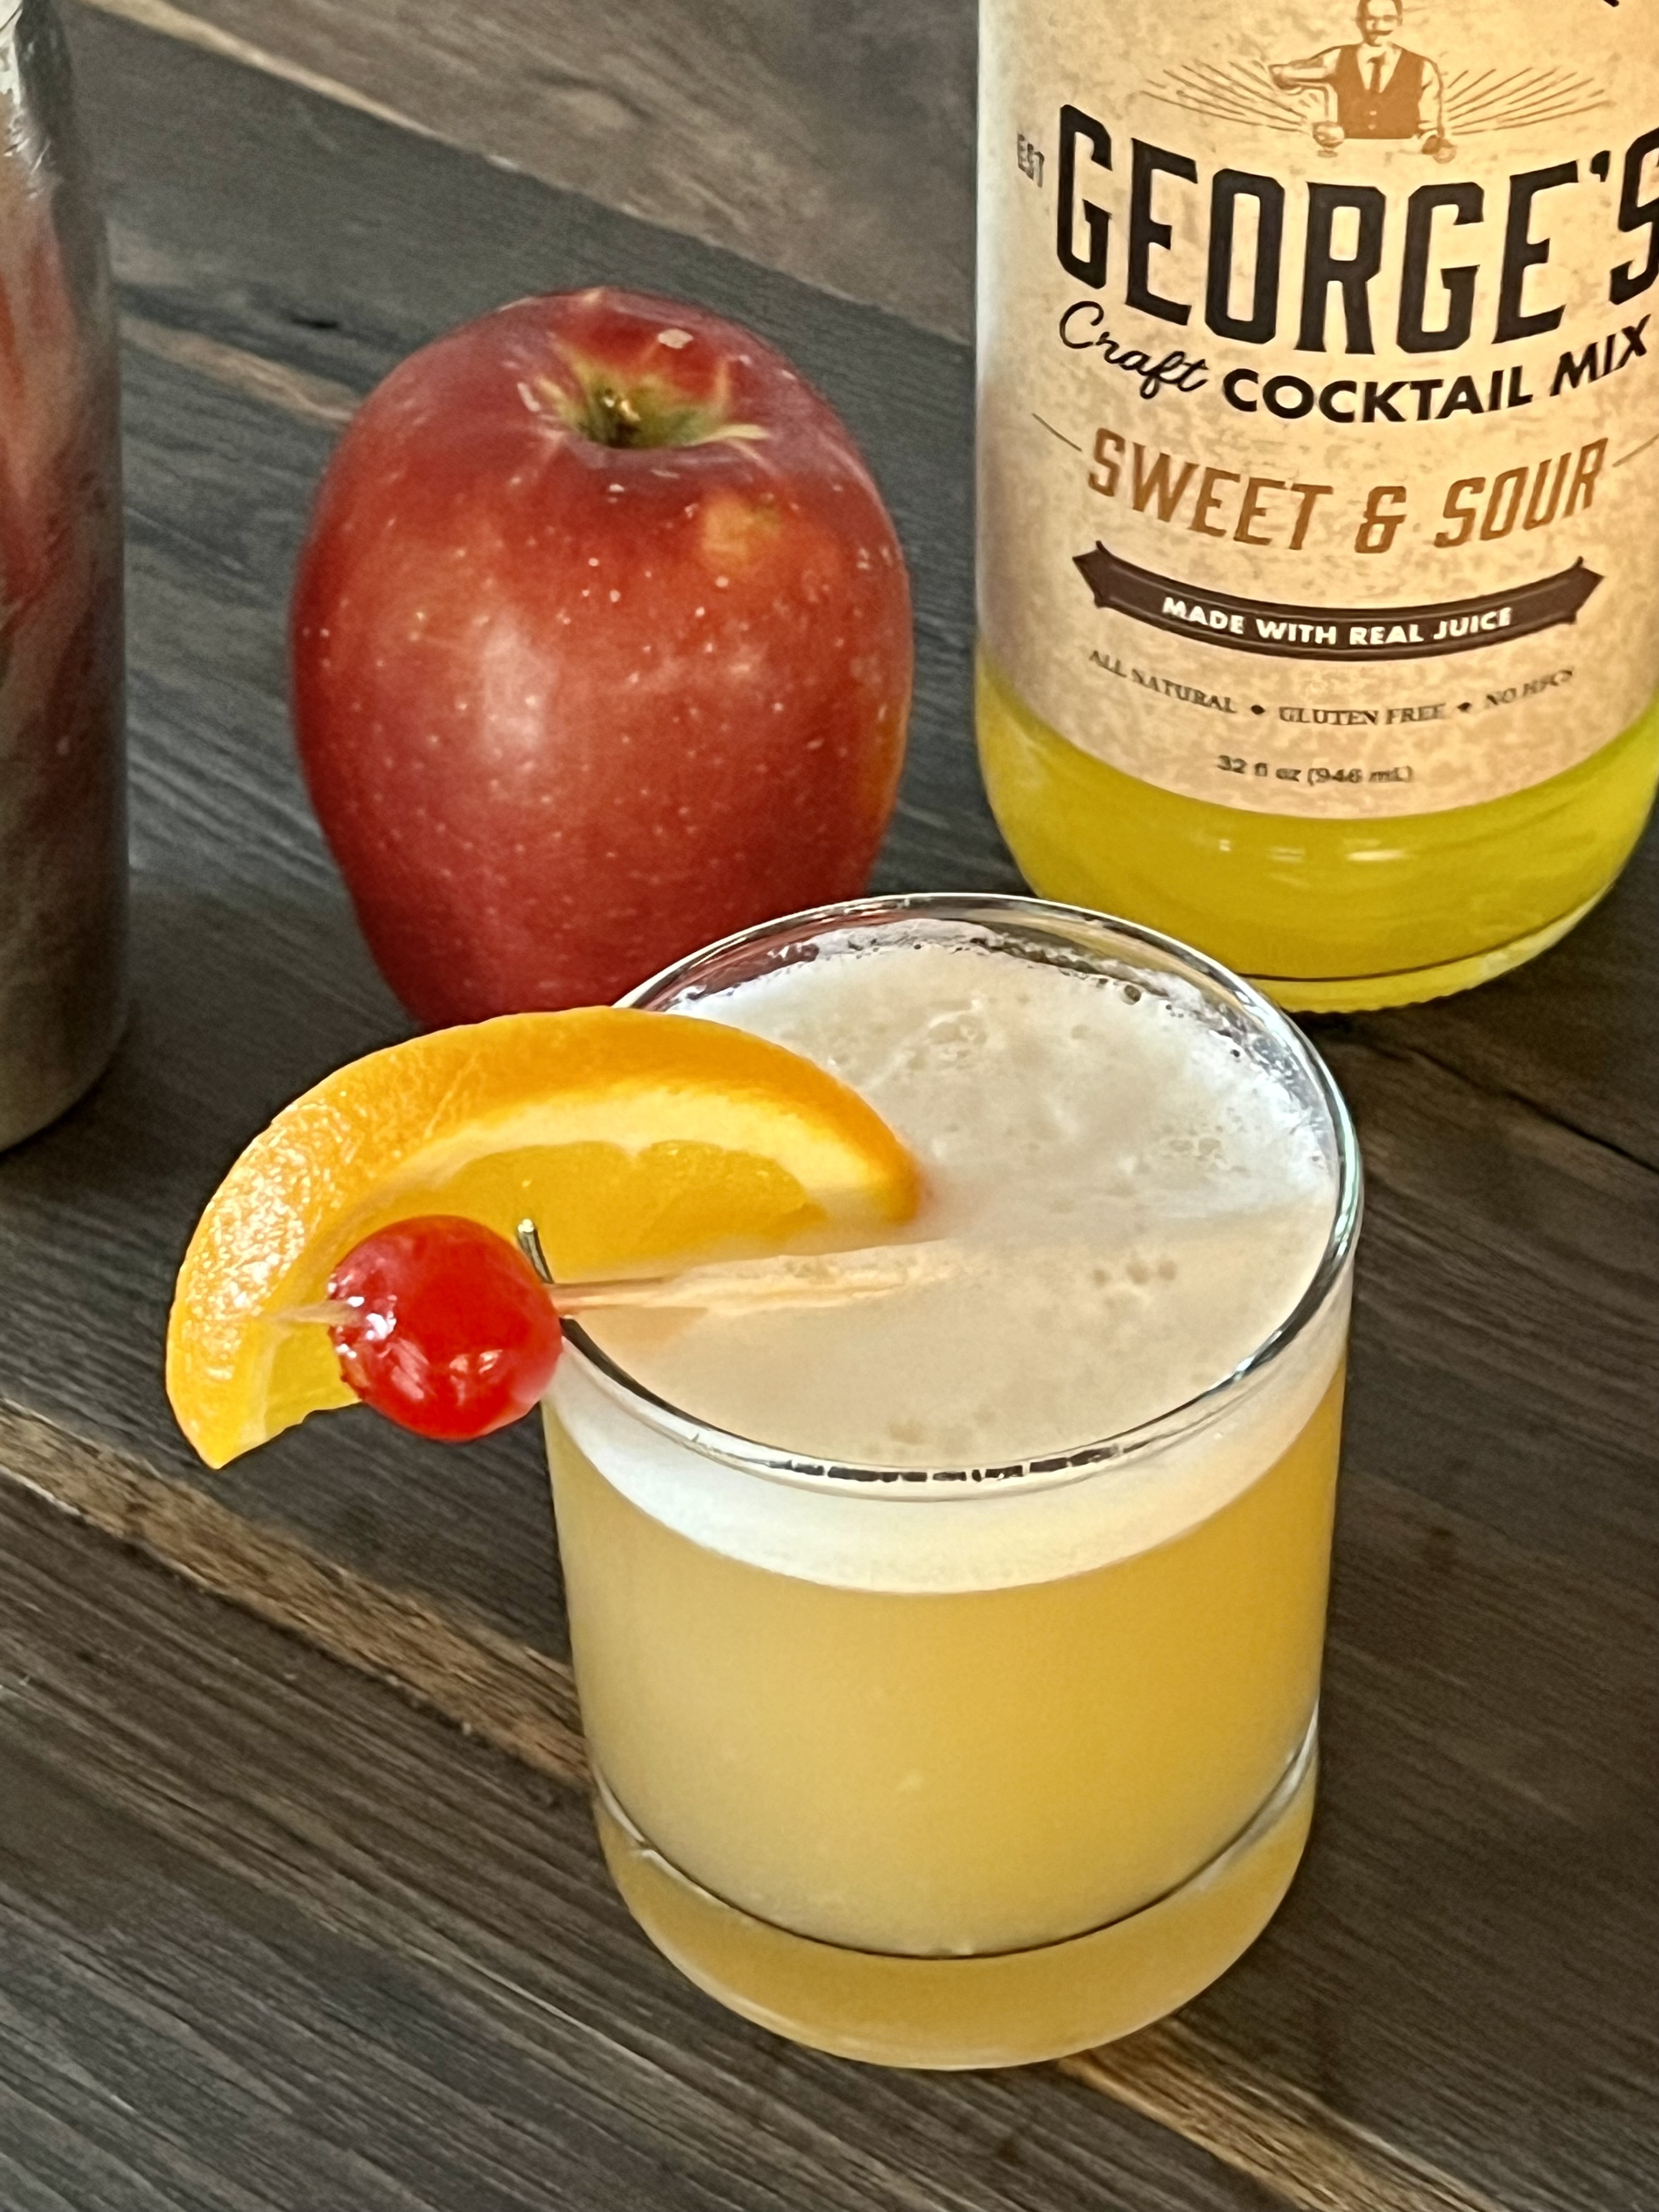 George's Apple Sour Cocktail recipe